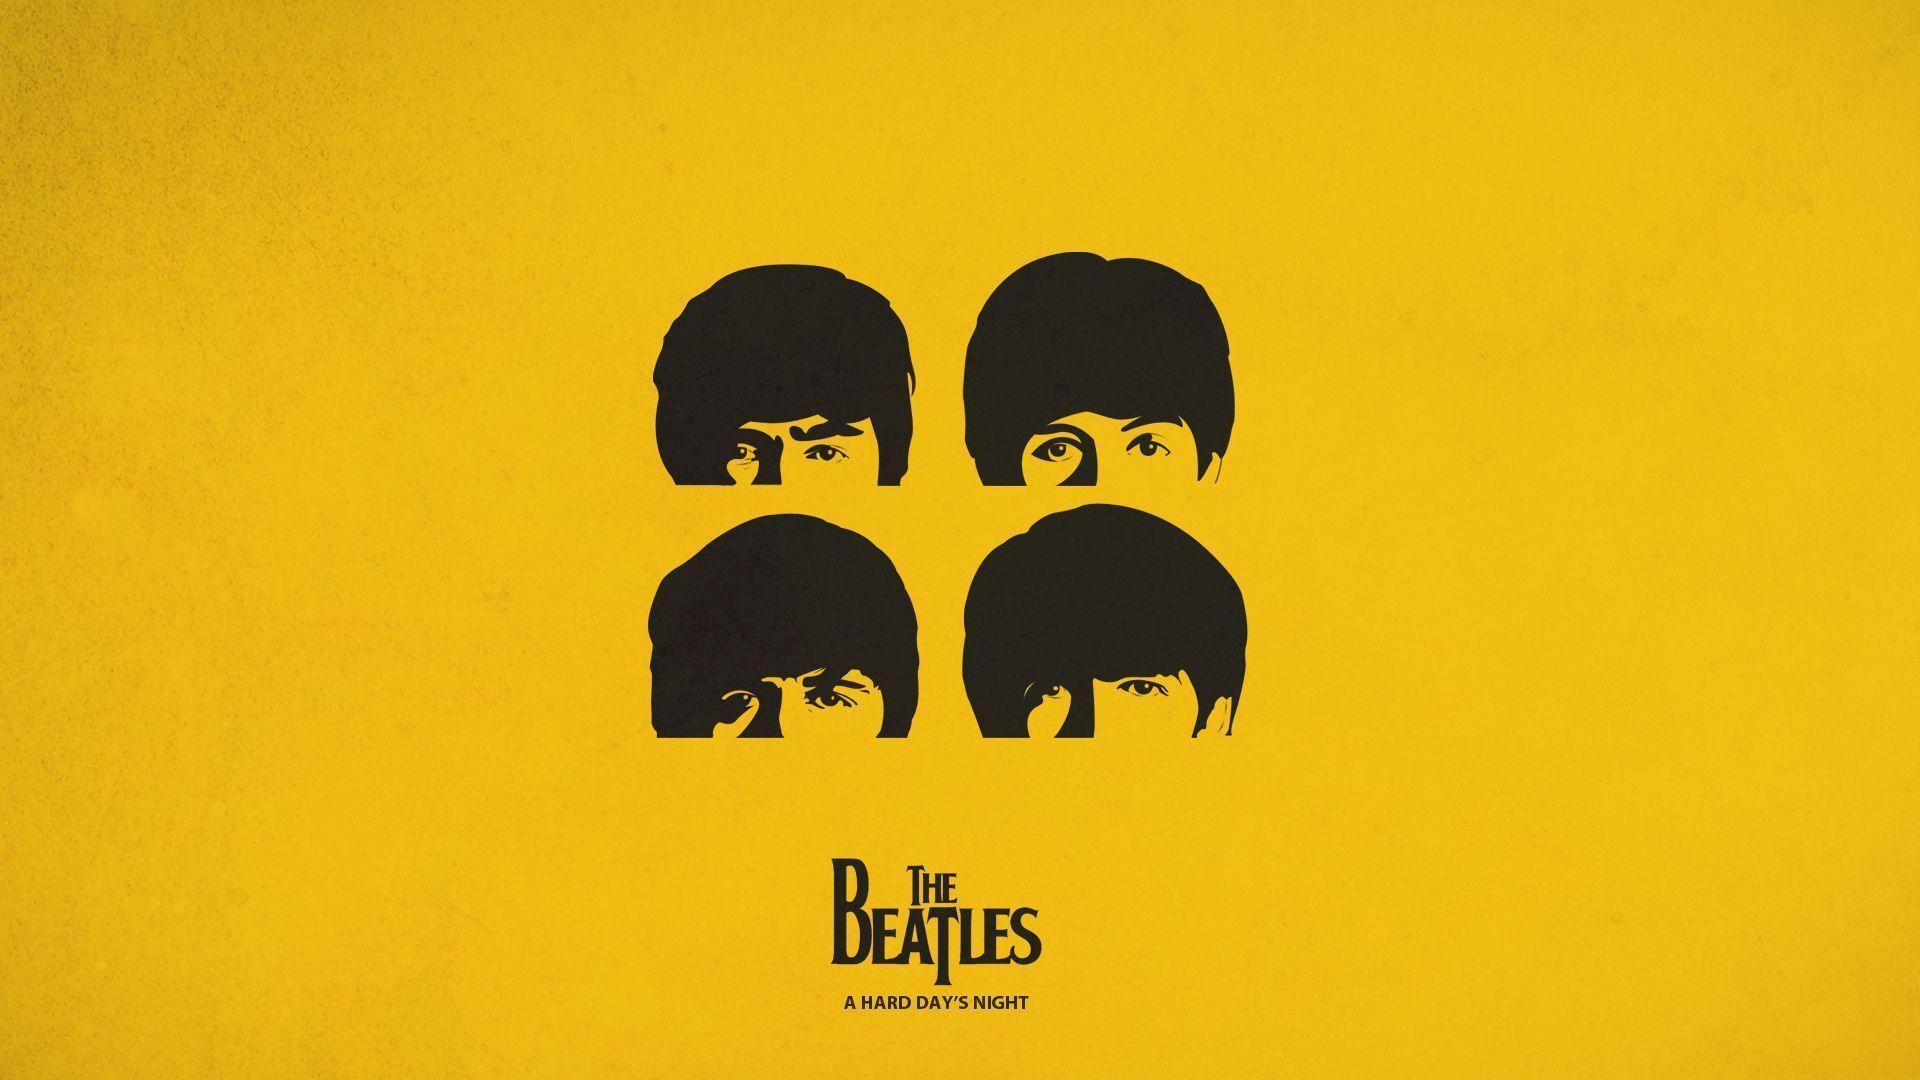 Beatles Desktop Wallpaper FREE on Latoro.com